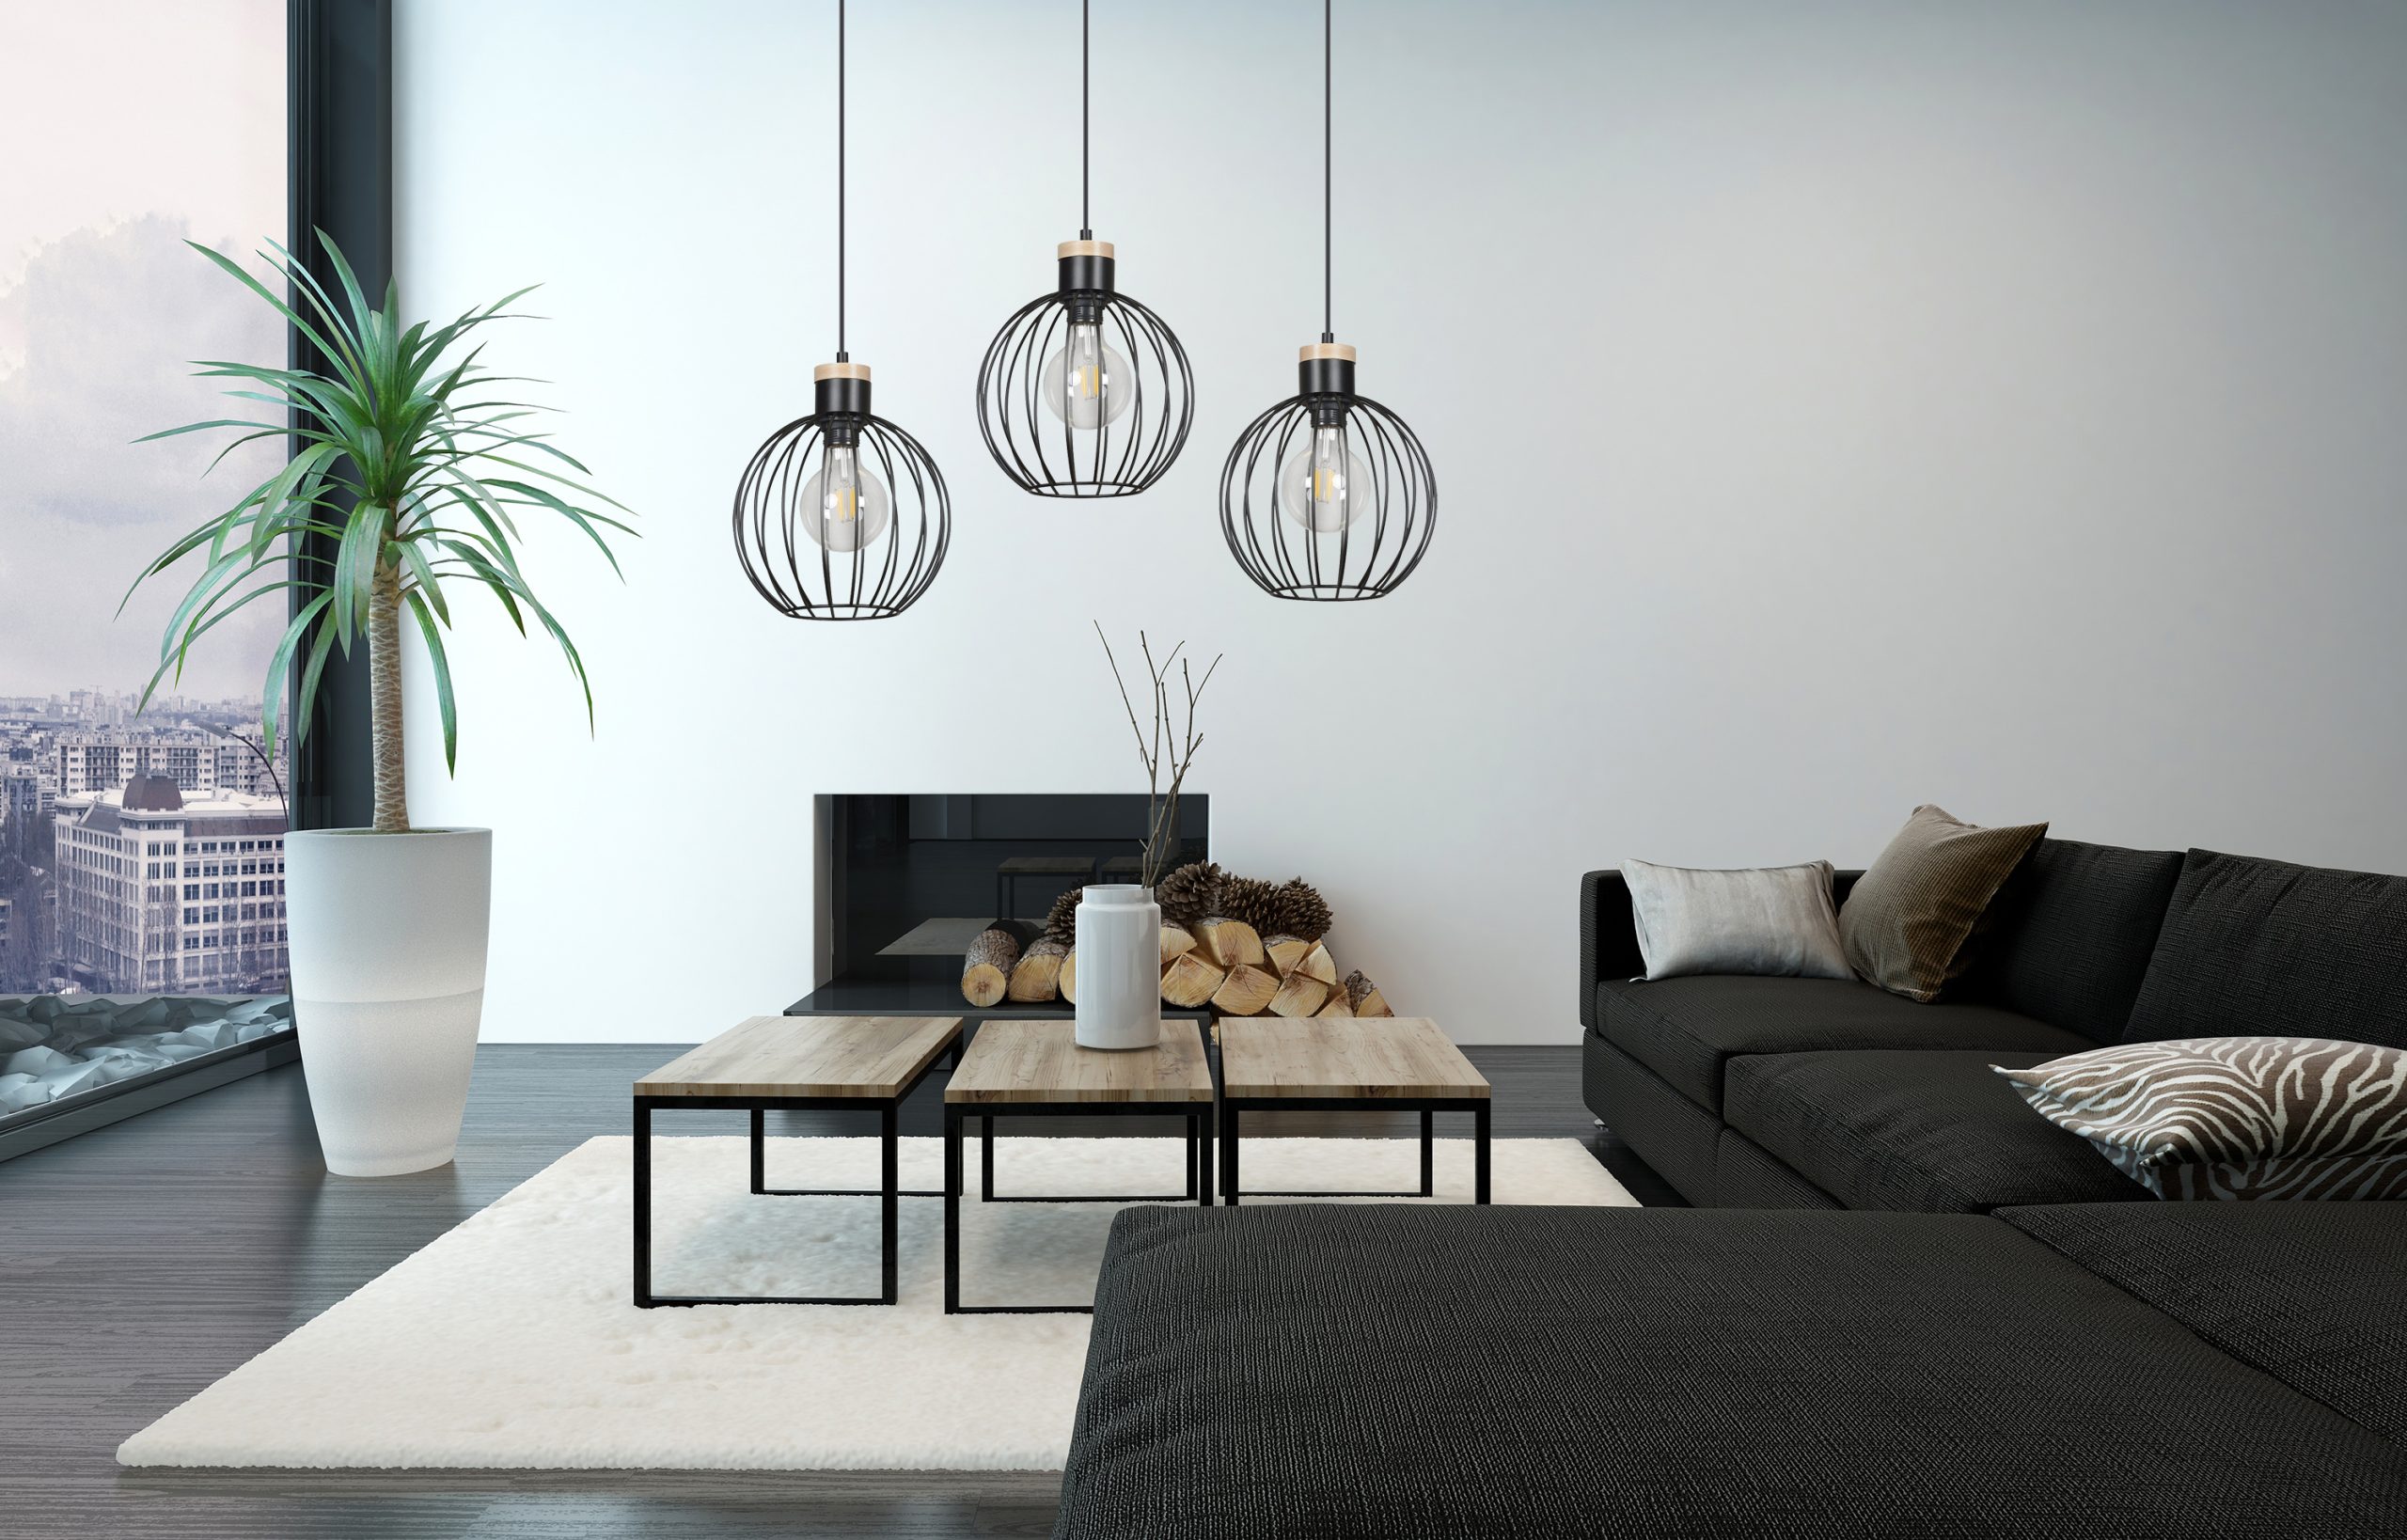 Spacious living room with modern furnishings